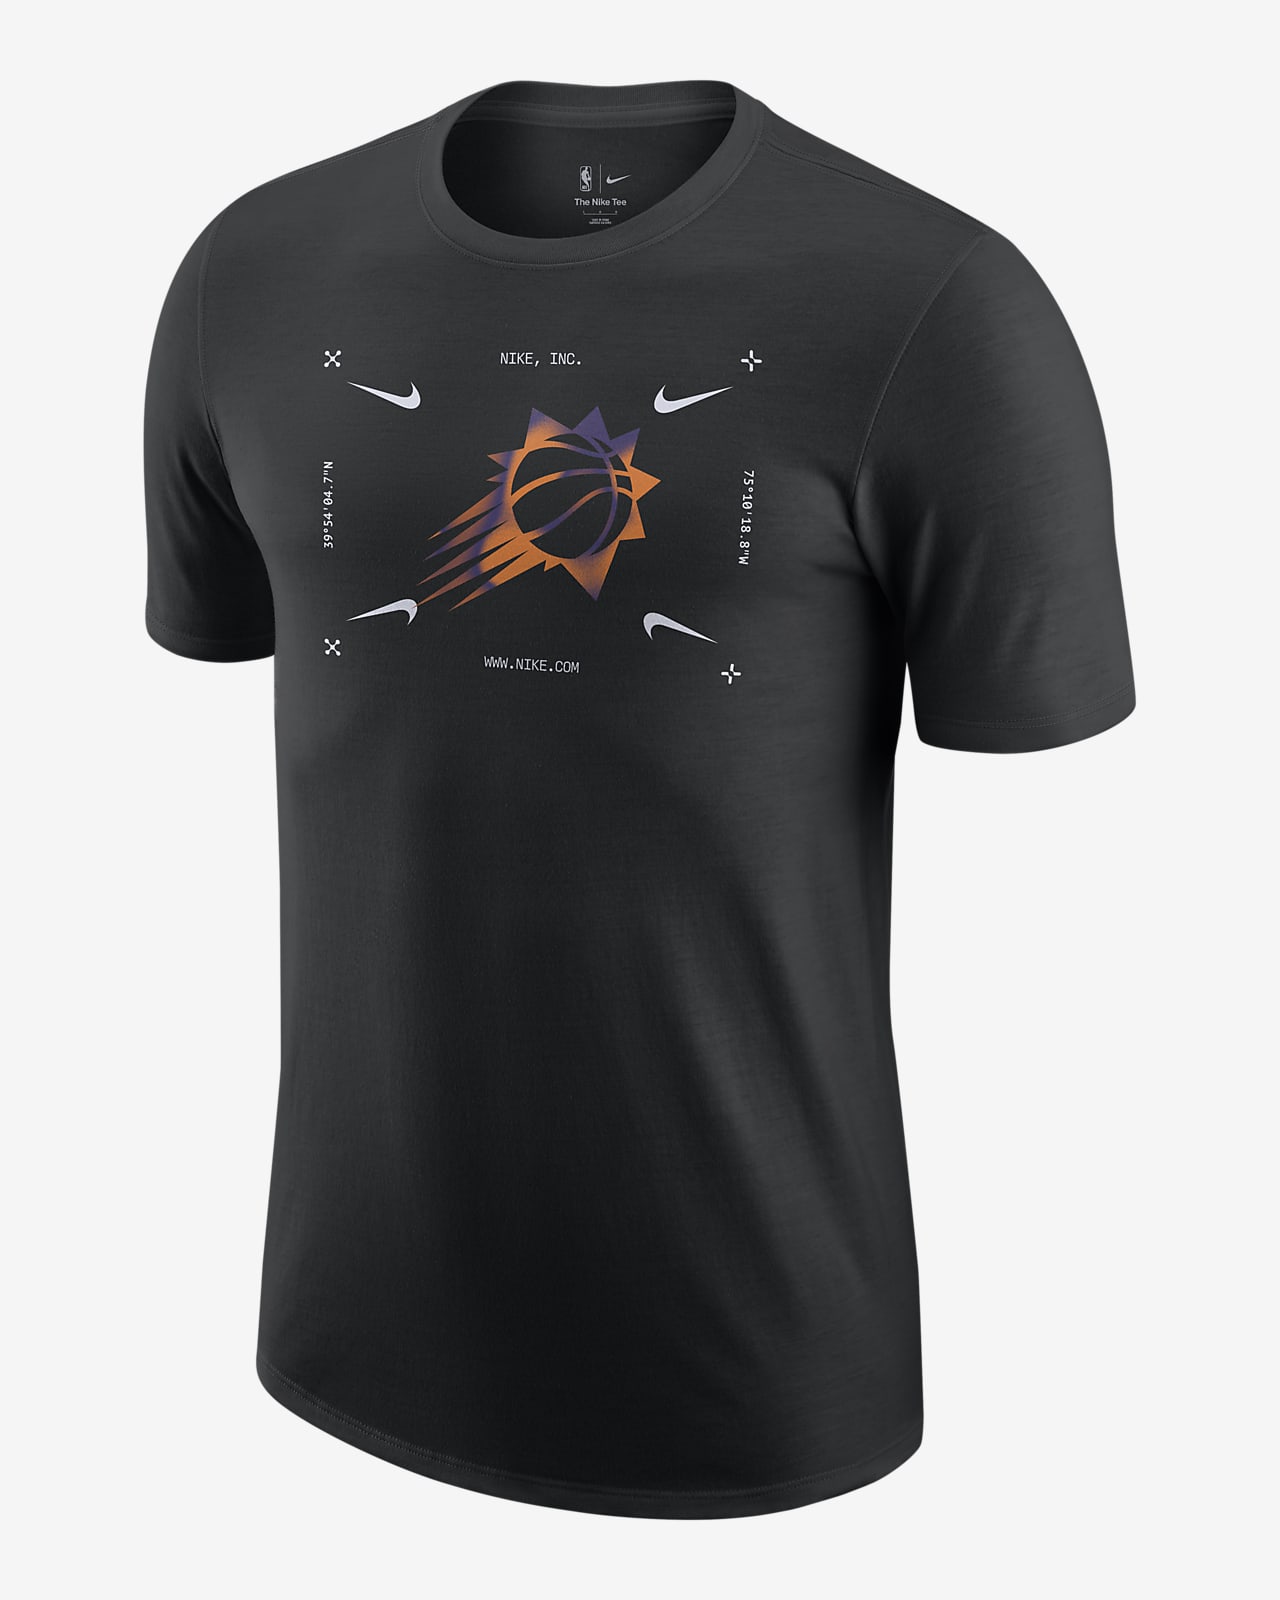 Phoenix Suns Men's Nike NBA T-Shirt